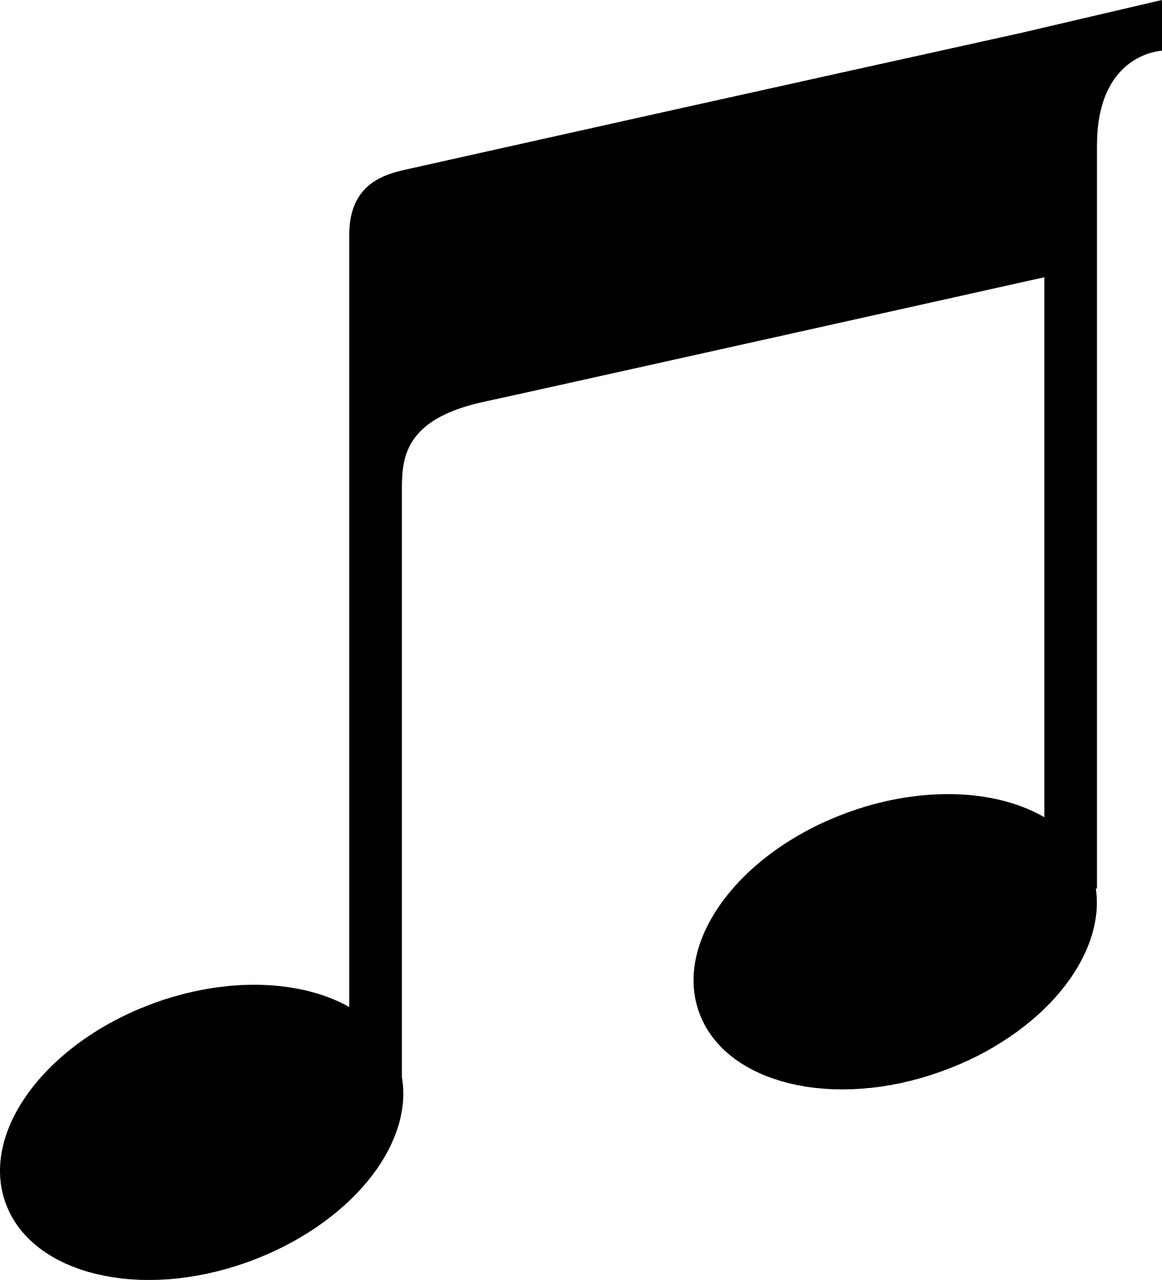 Dos notas musicales corcheas, unidas; versión de color negro